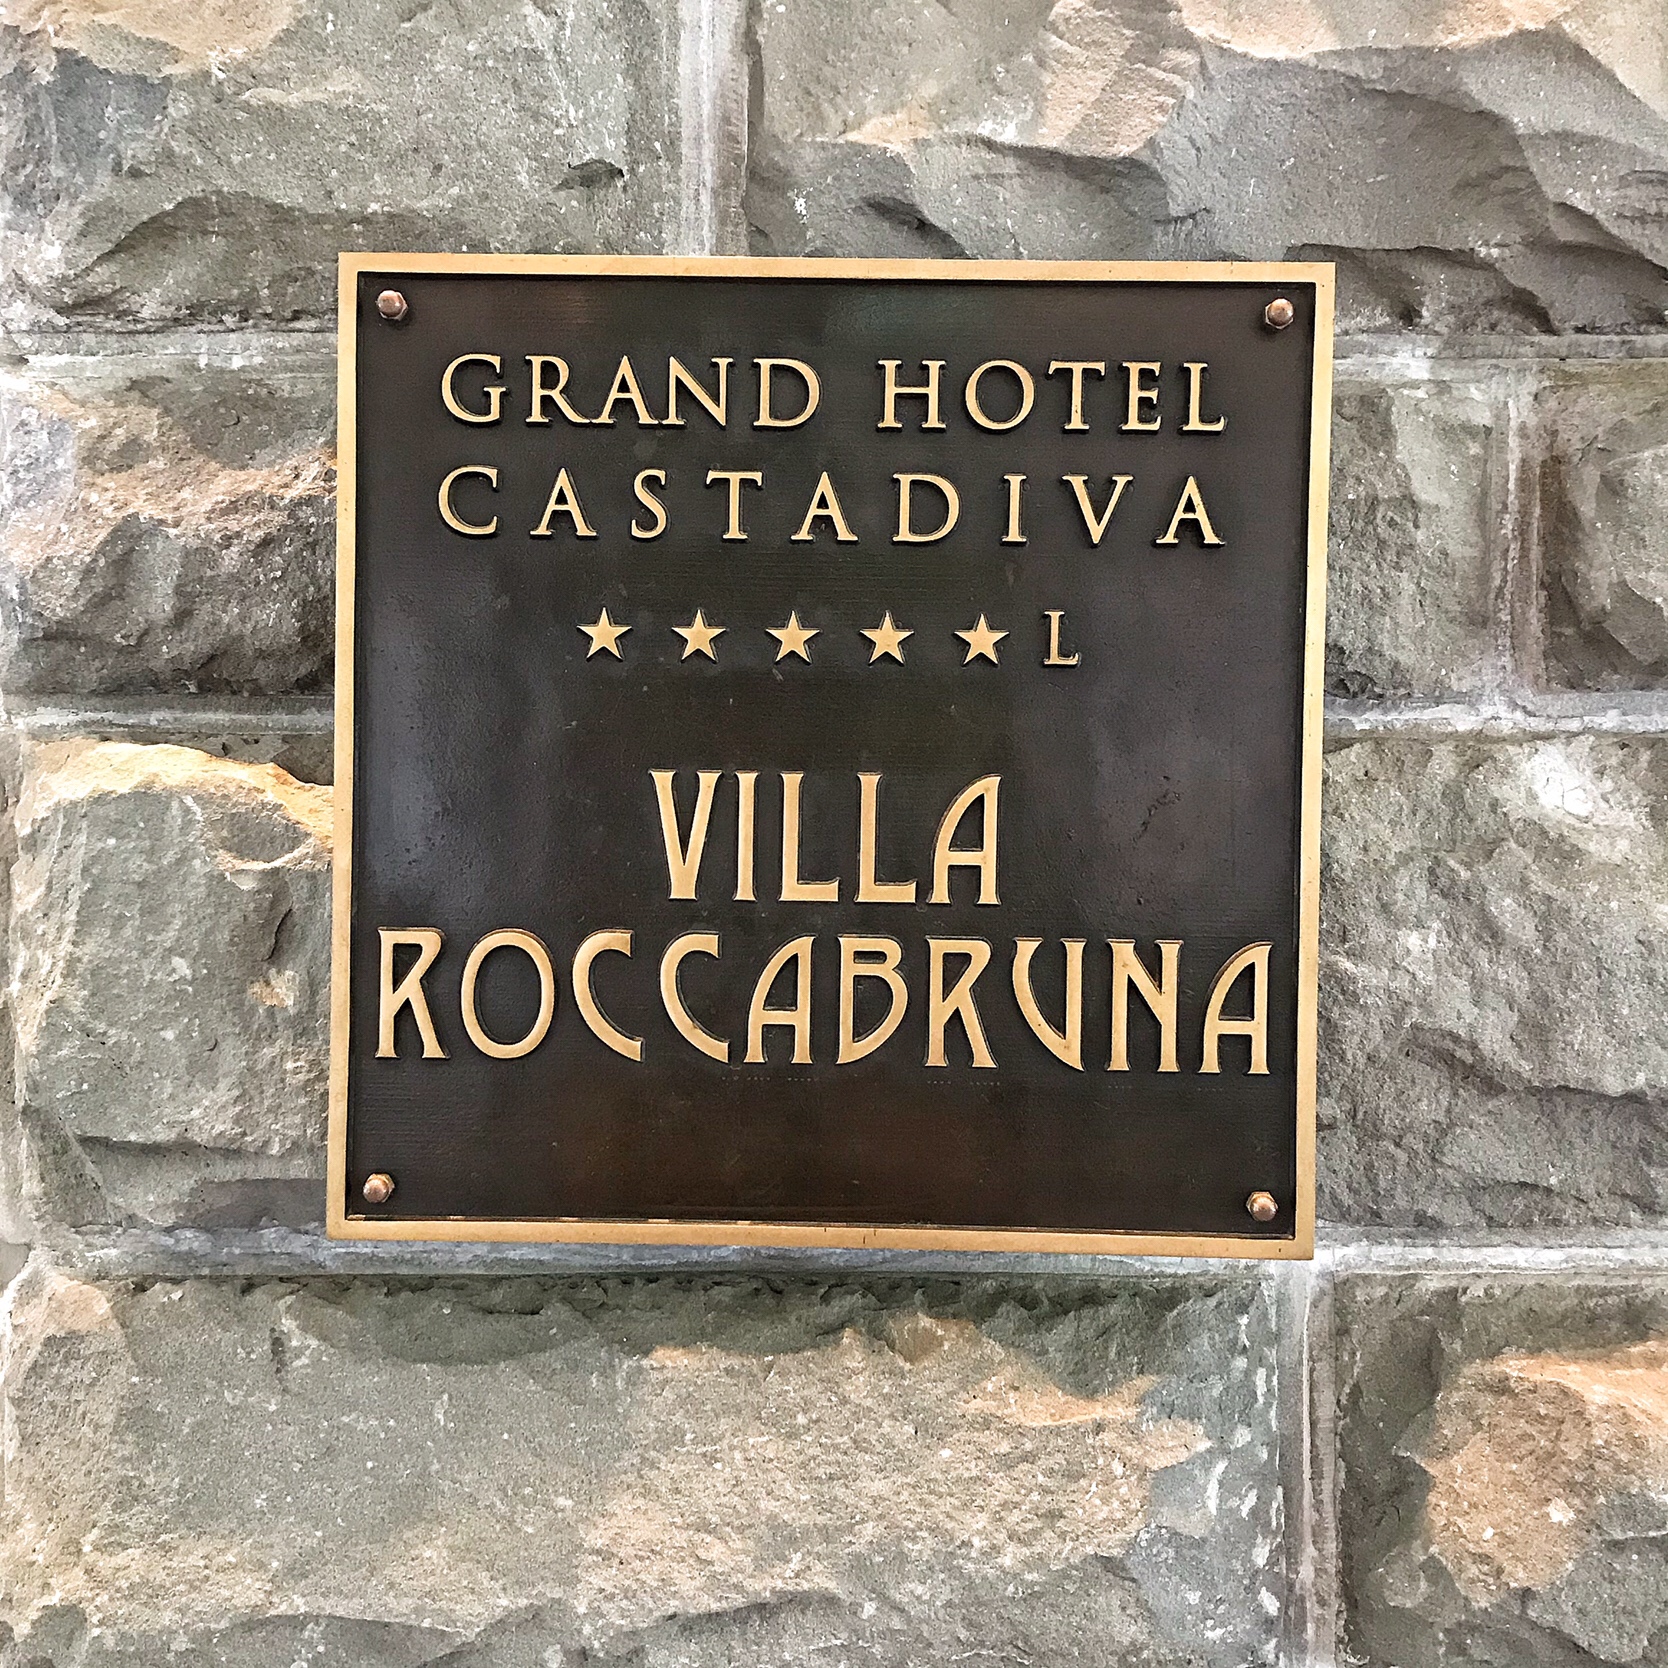 Castadiva Resort dove i sogni si vivono